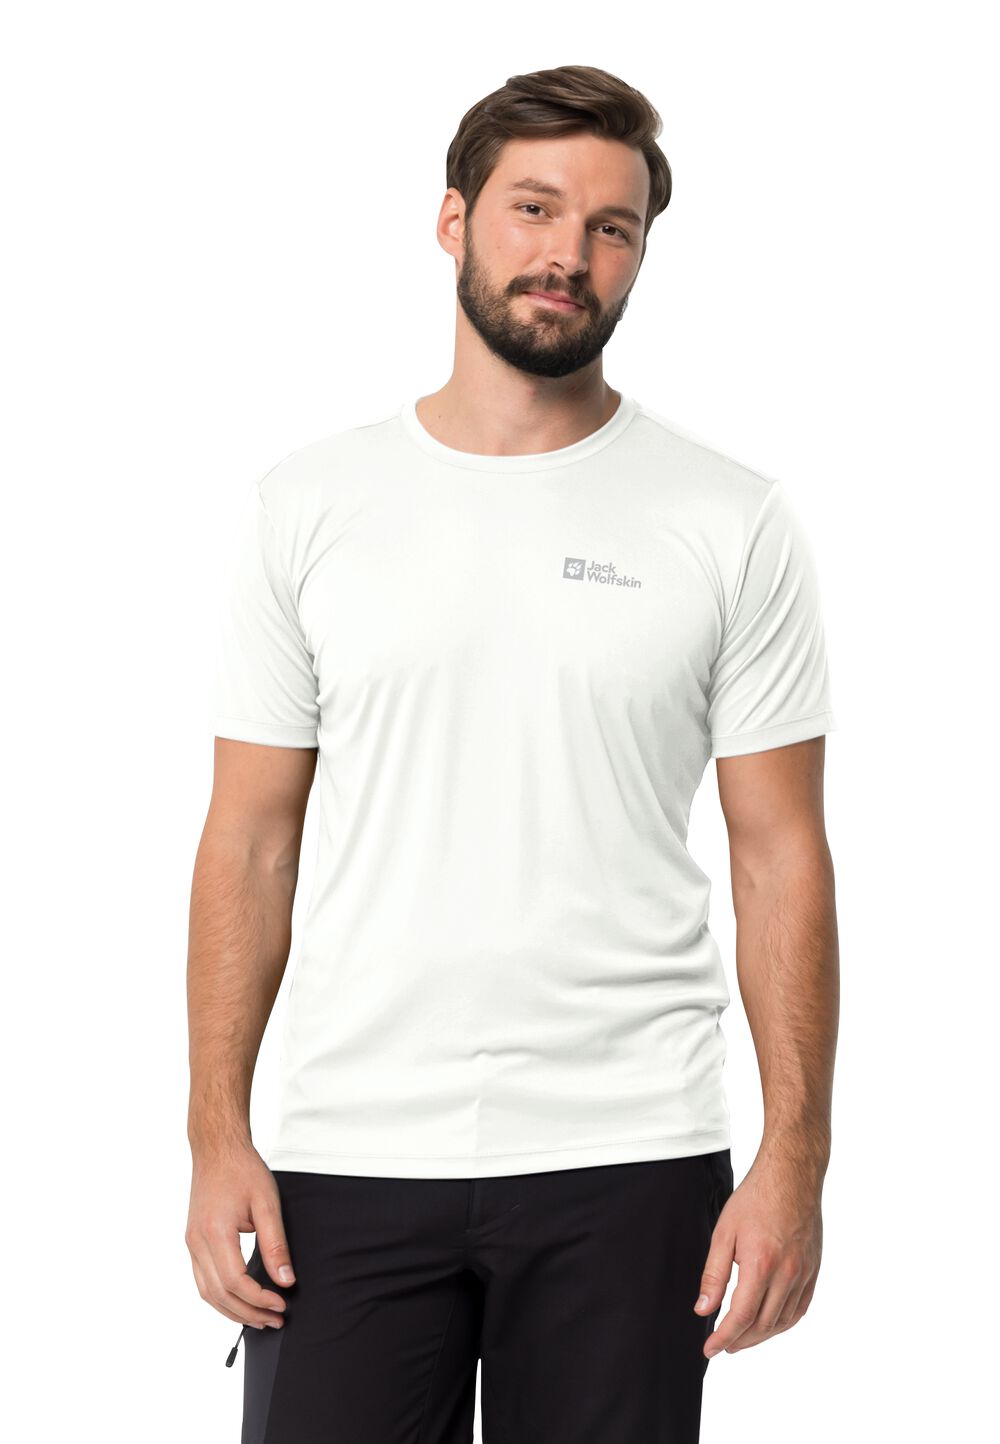 Jack Wolfskin Tech T-Shirt Men Functioneel shirt Heren L wit stark white